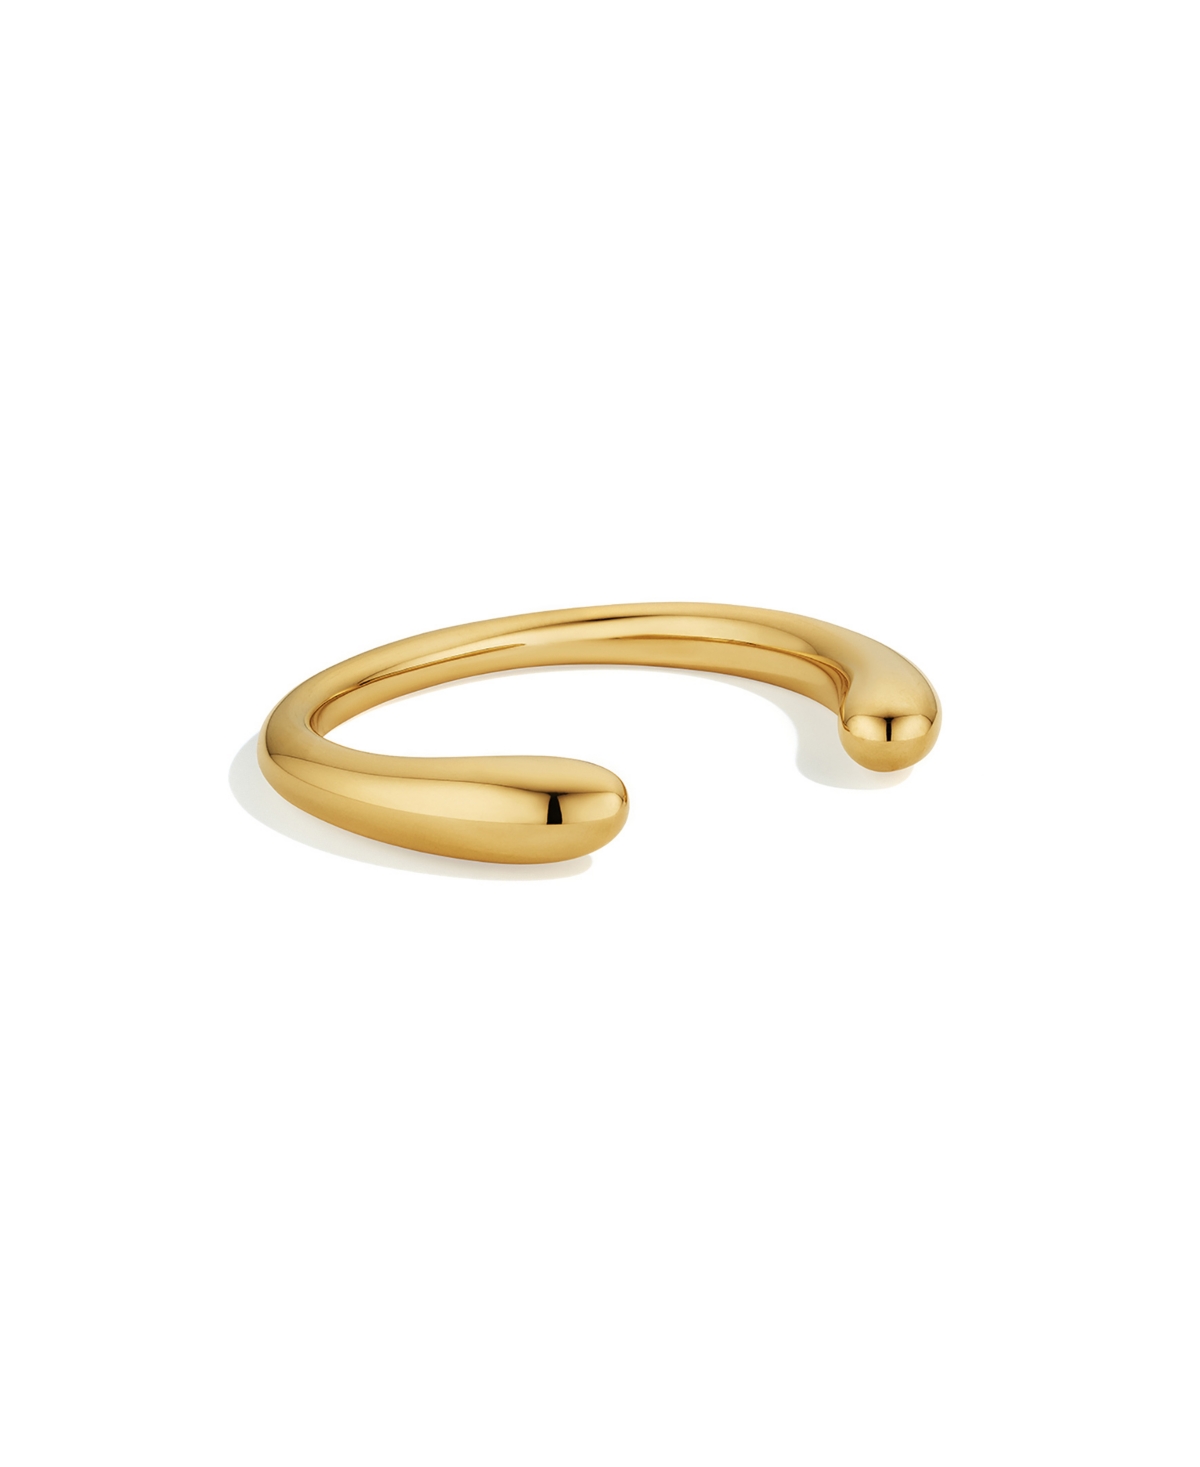 24K Gold-Plated Dash Cuff Bracelet - Gold